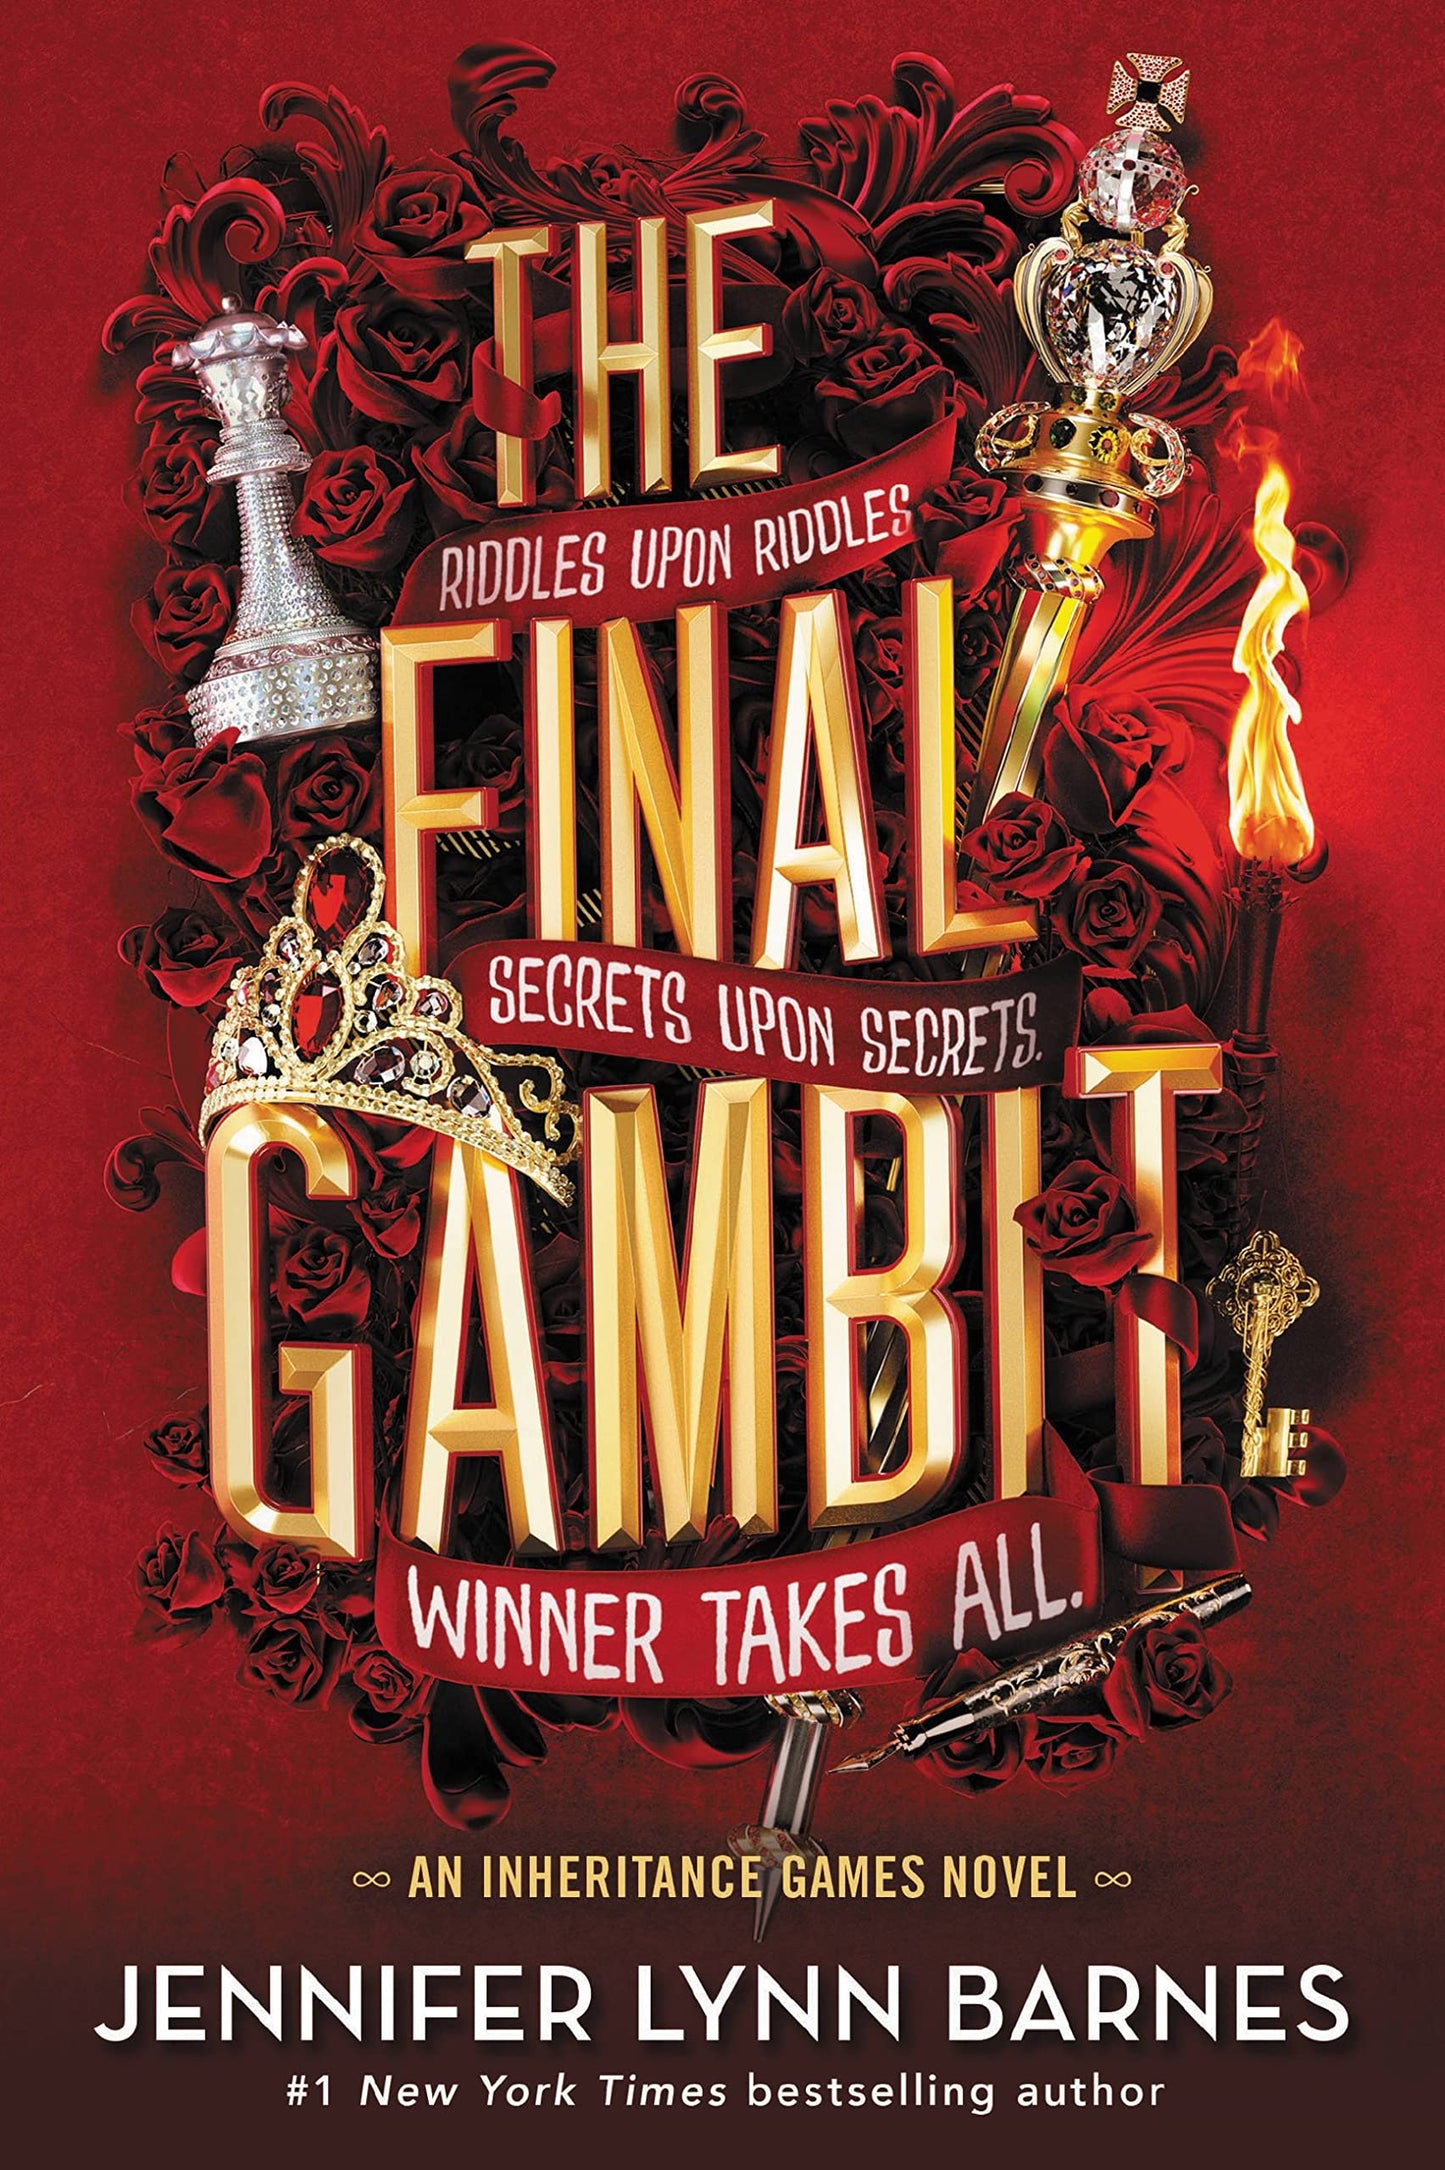 The Final Gambit by Jennifer Lynn Barnes (Book 3 of 4)